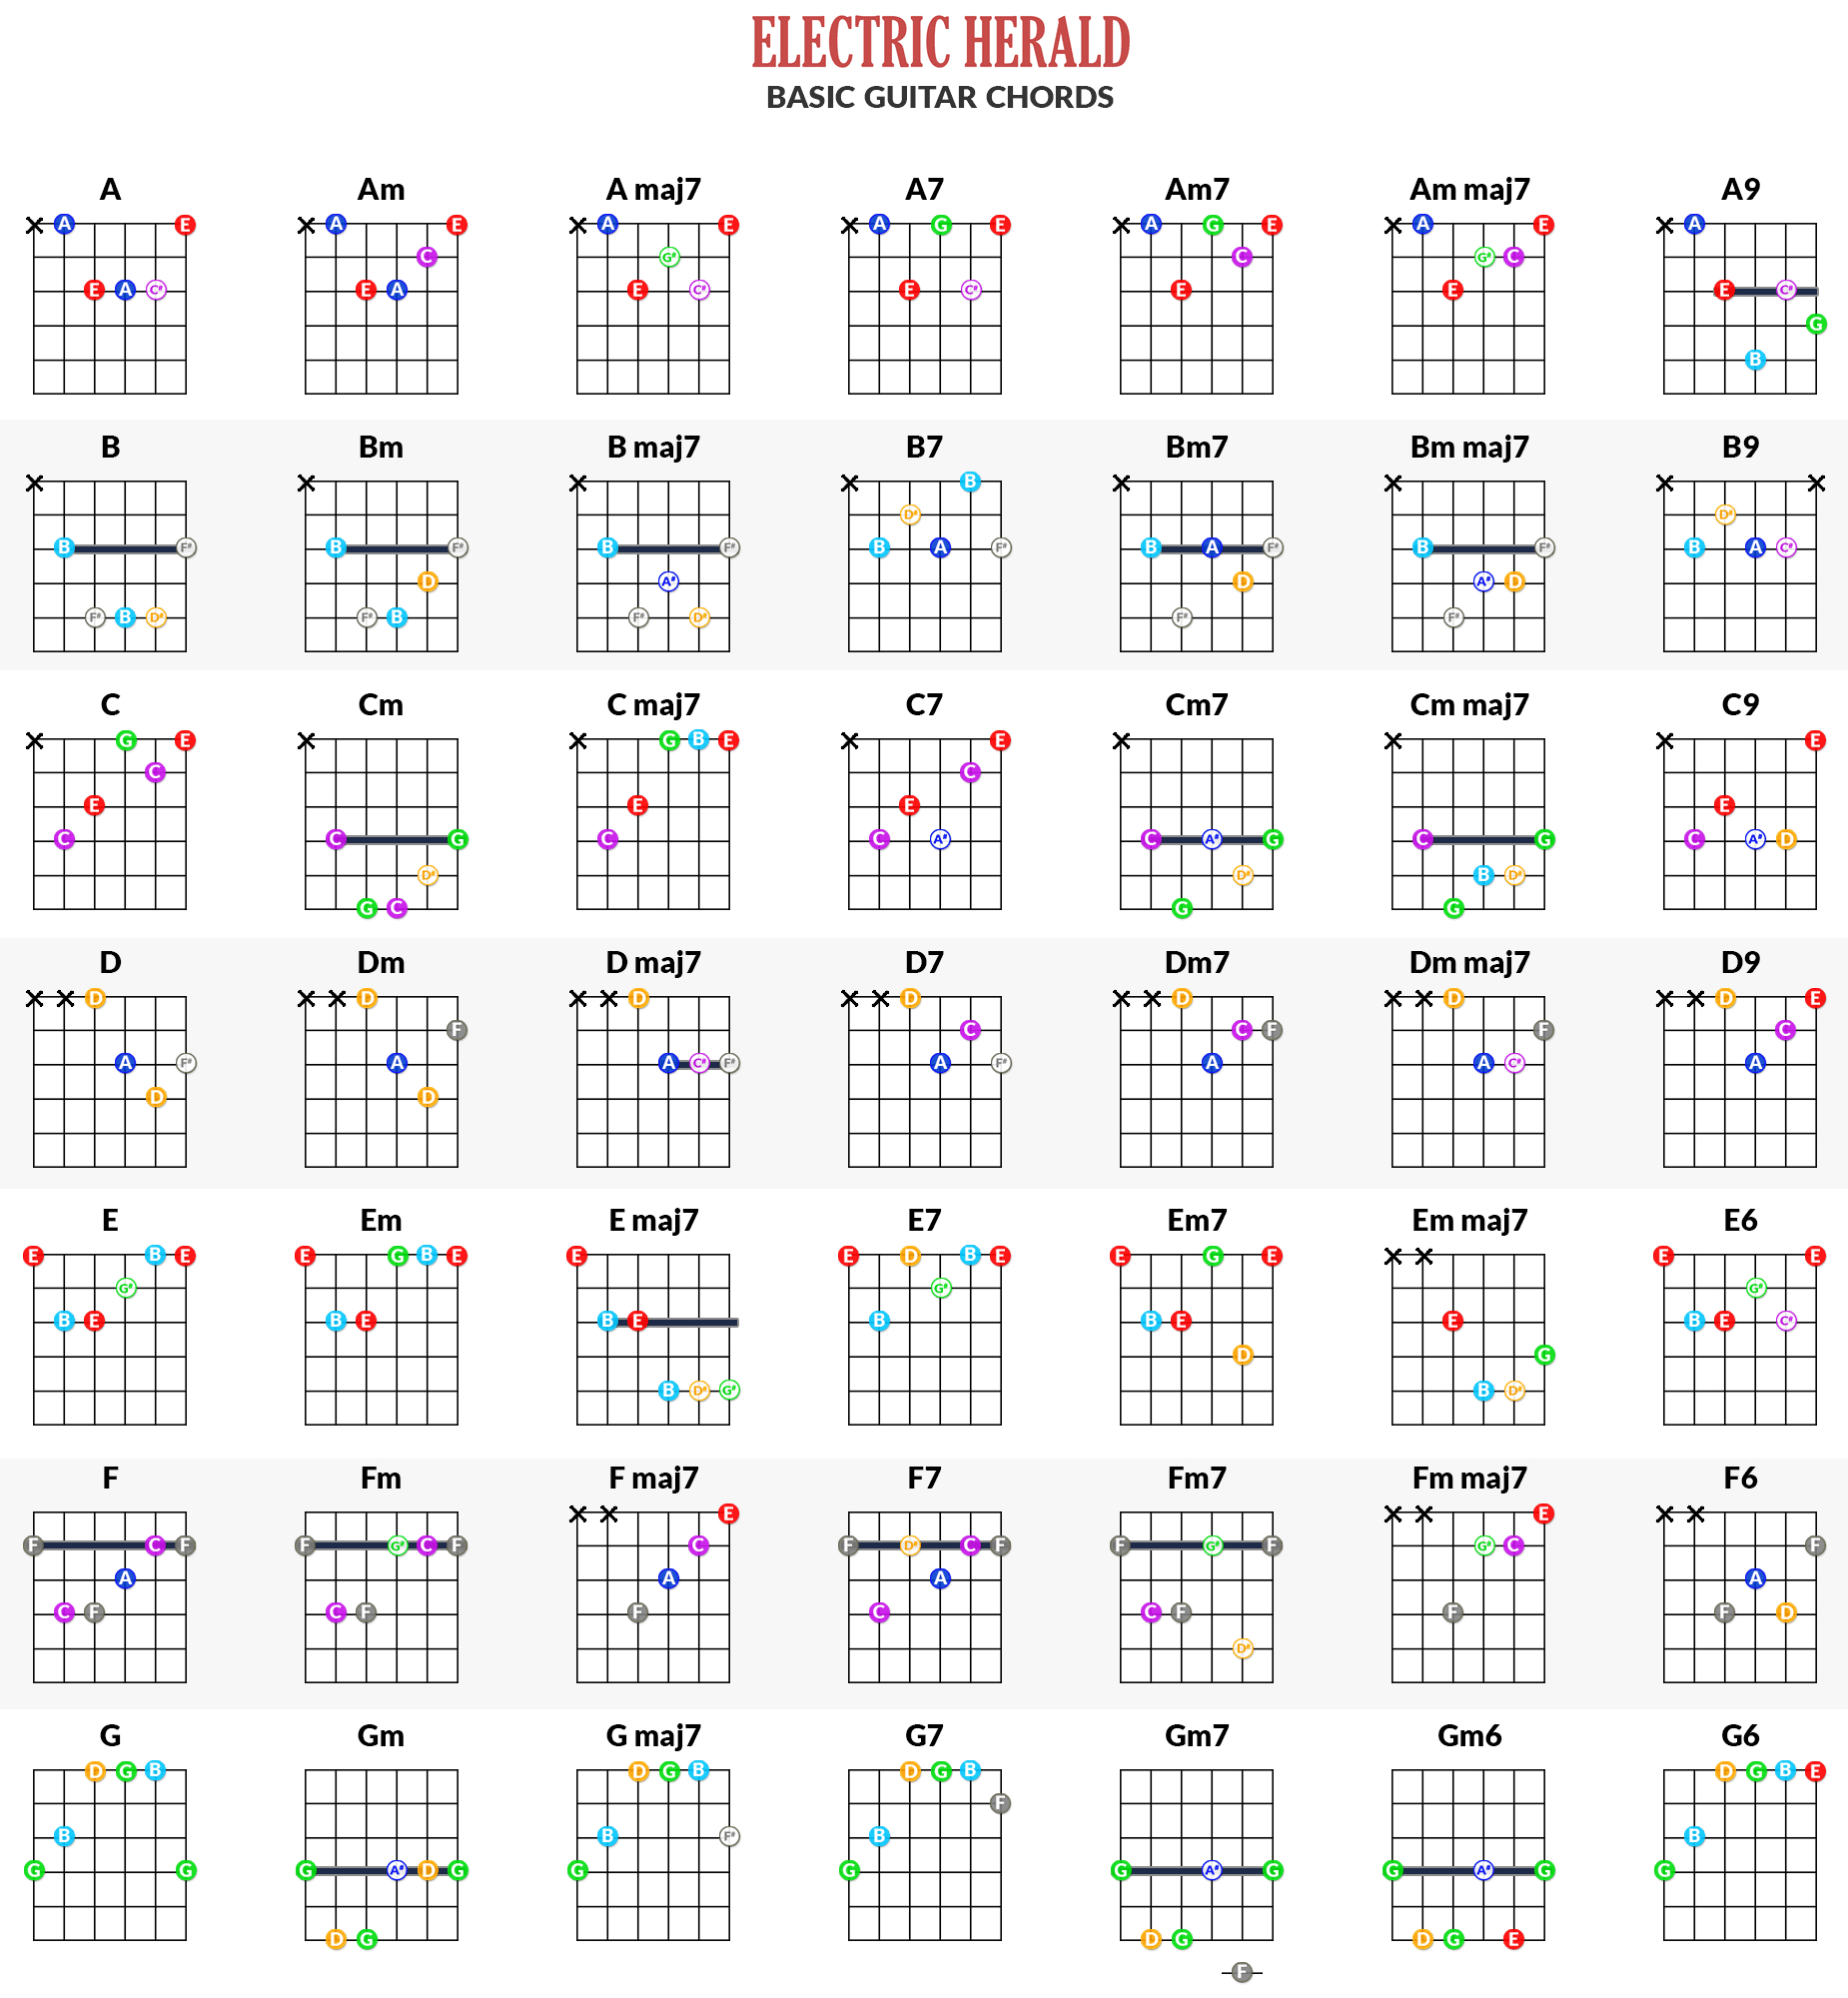 Beginner Guitar Chords Online Guitar Chords Chart Free App Electric Herald